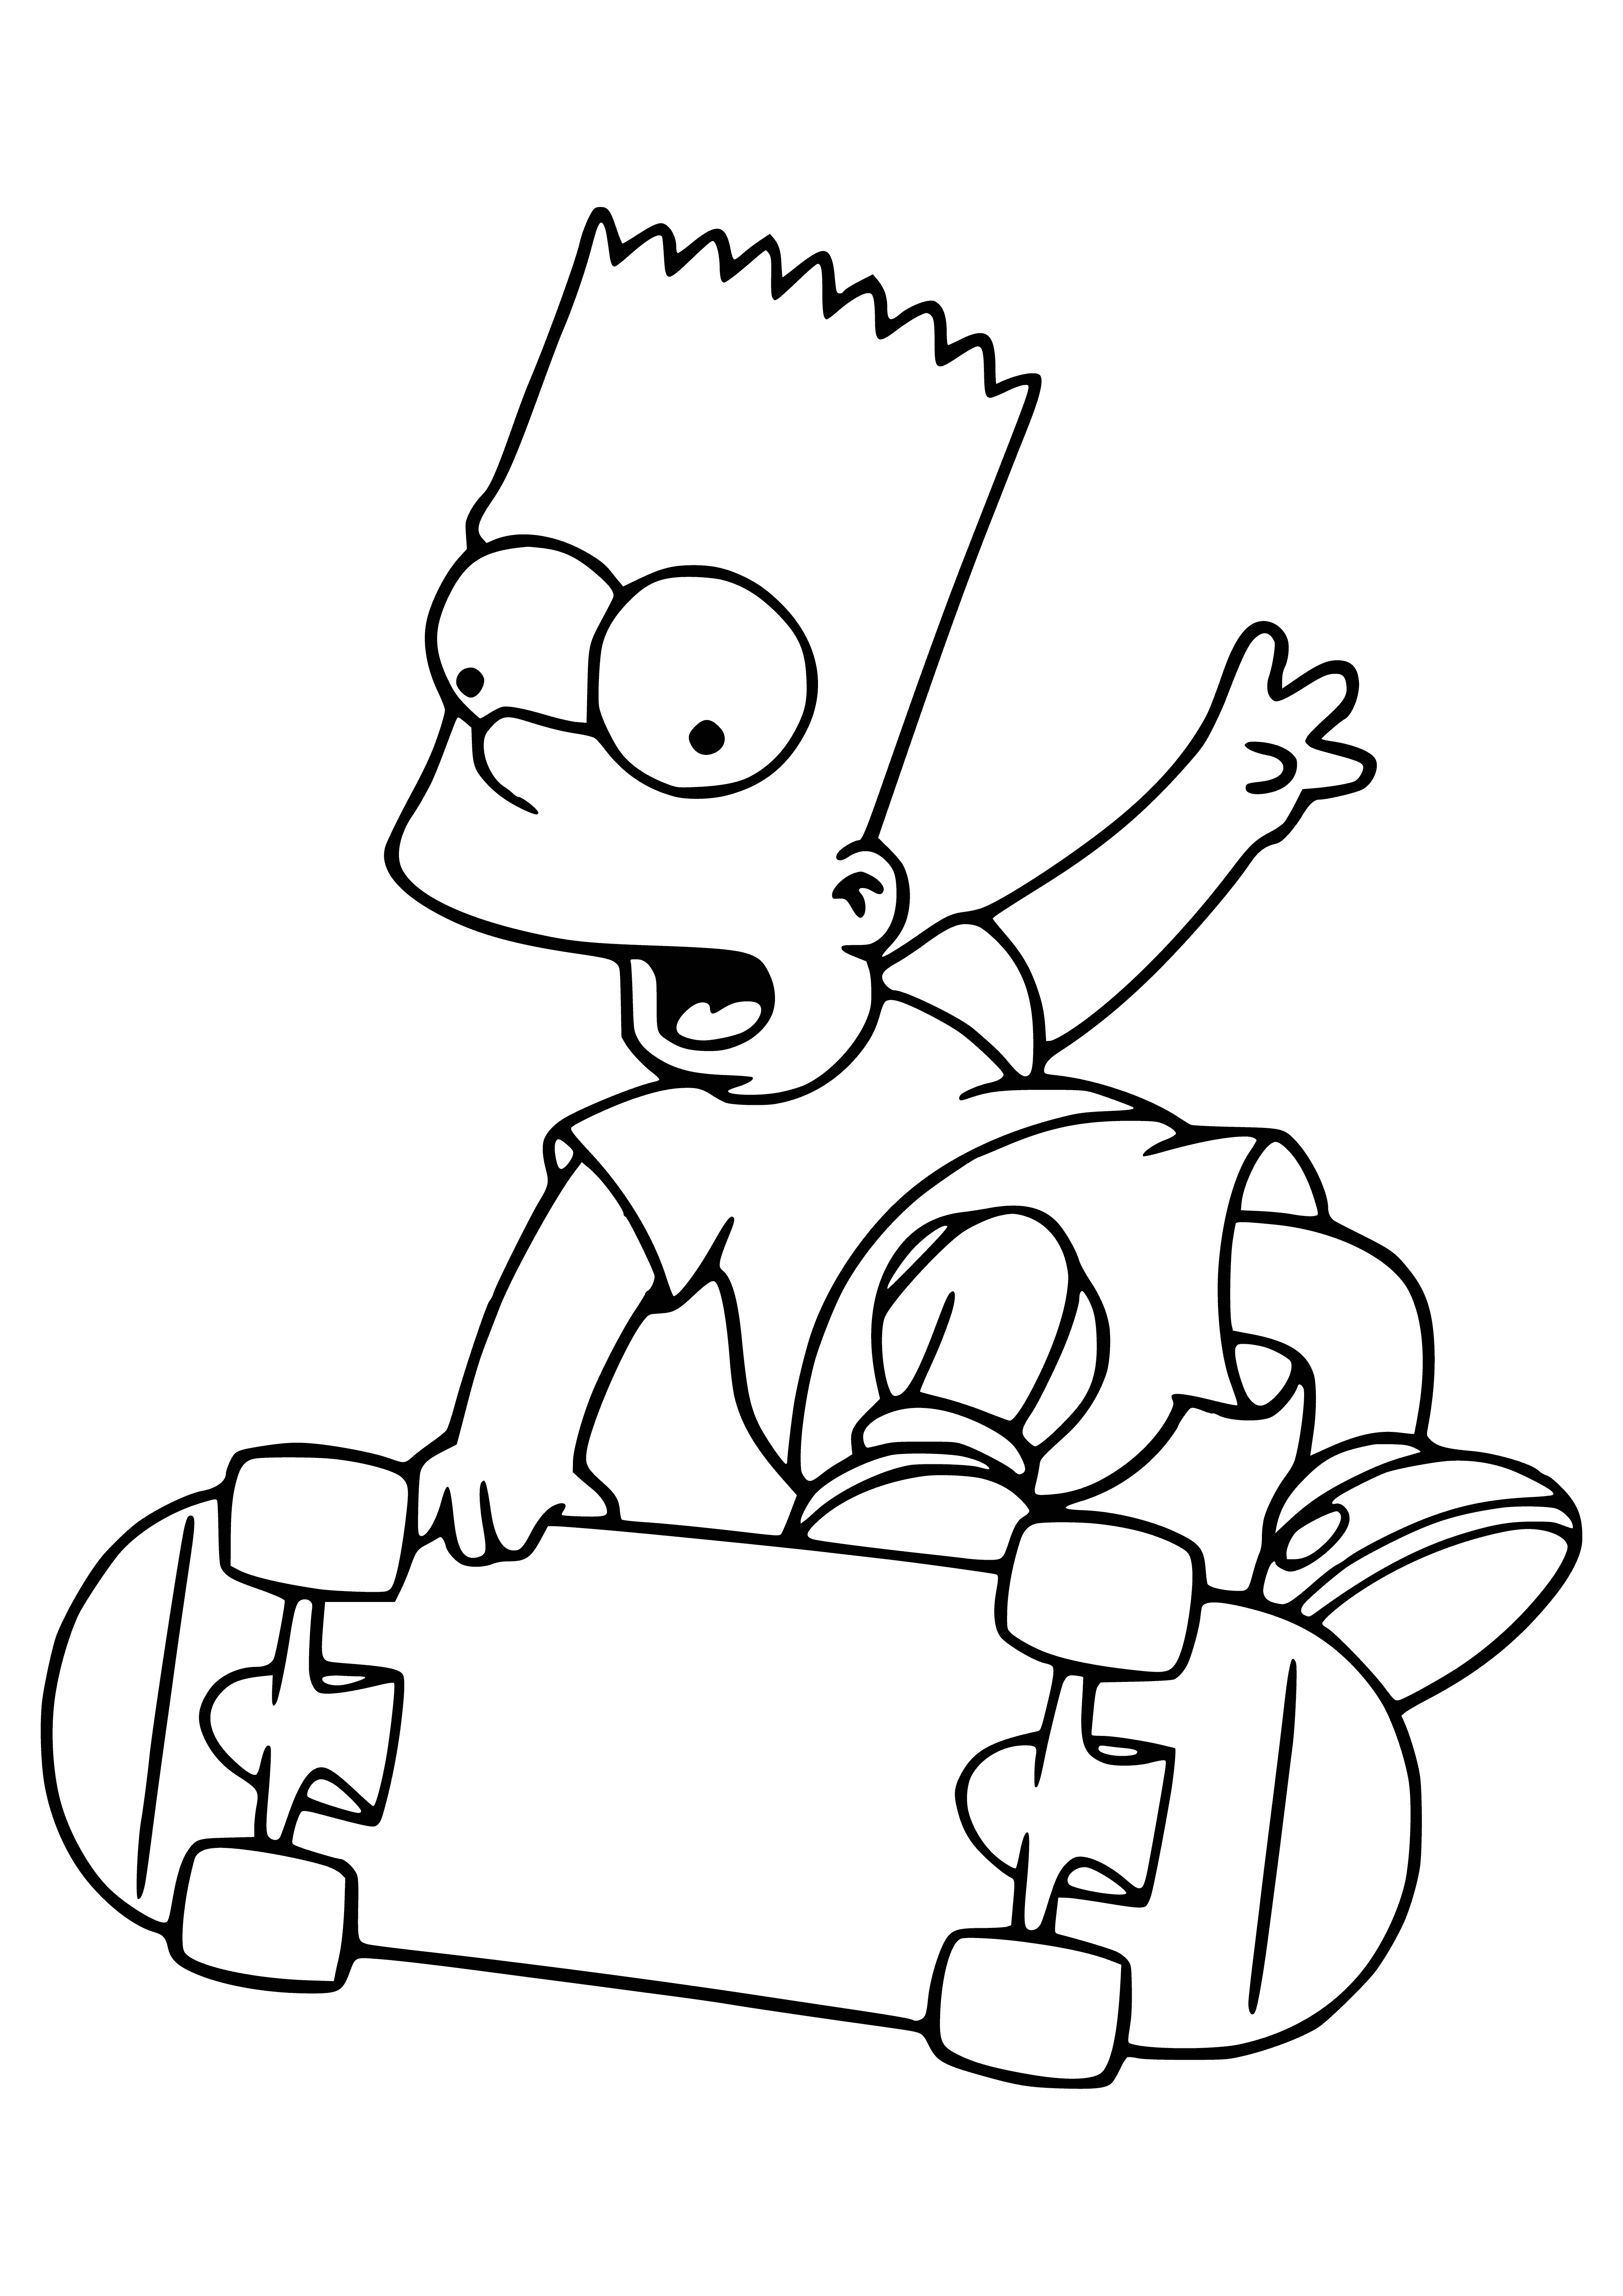 12.10 13. Барт симпсон на скейте. Раскрашенный симпсон барт симпсон. Барт симпсон раскраска. Раскраски симпсон барт симпсон.